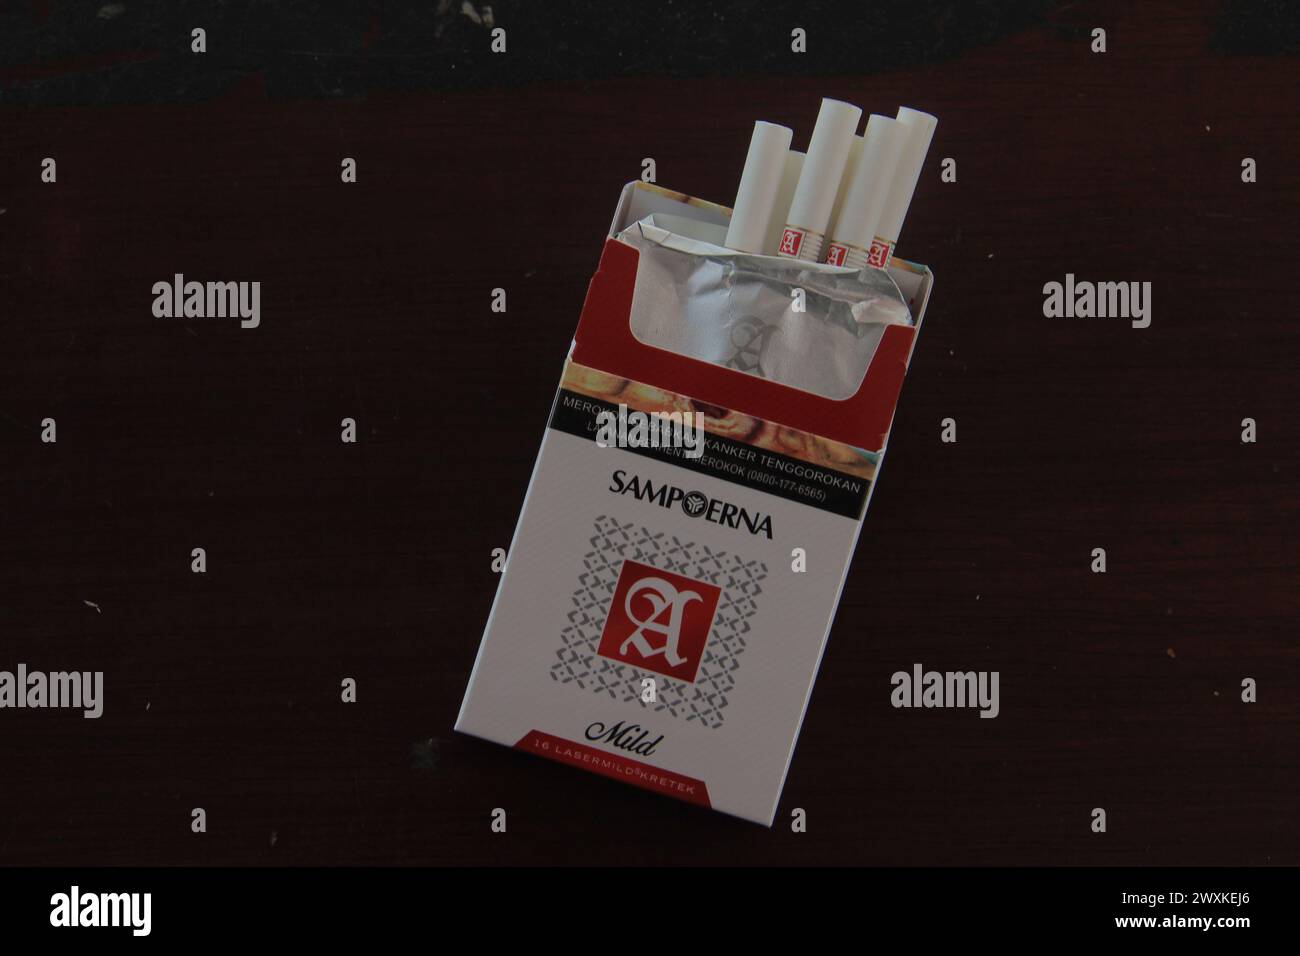 Sampoerna A Mild Cigarettes on black background Stock Photo